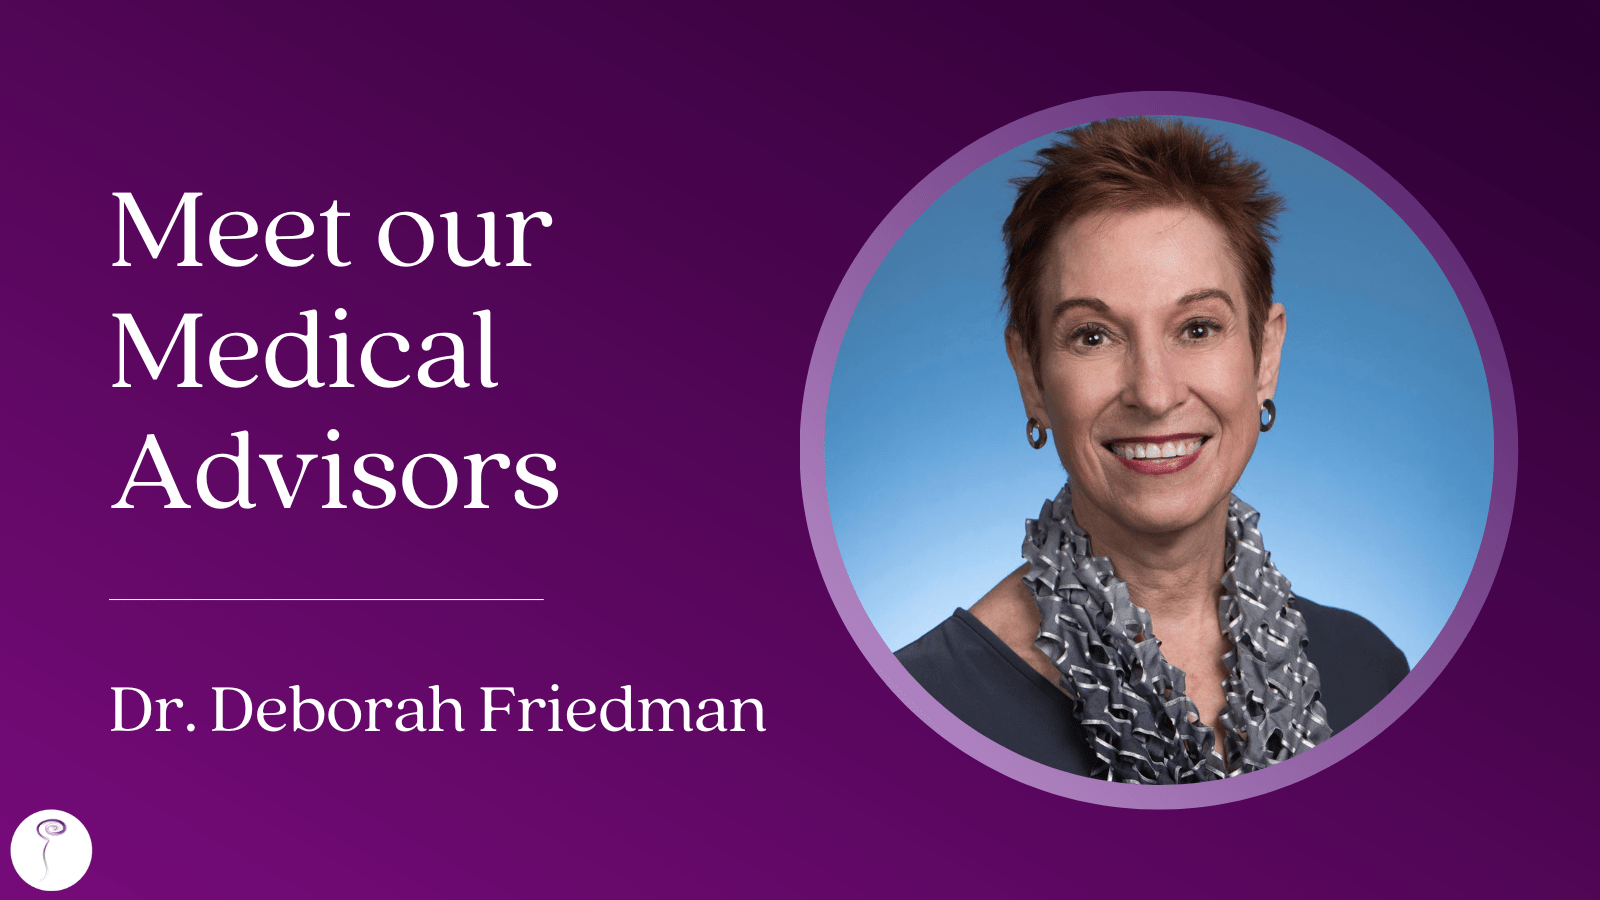 Meet Dr. Deborah Friedman